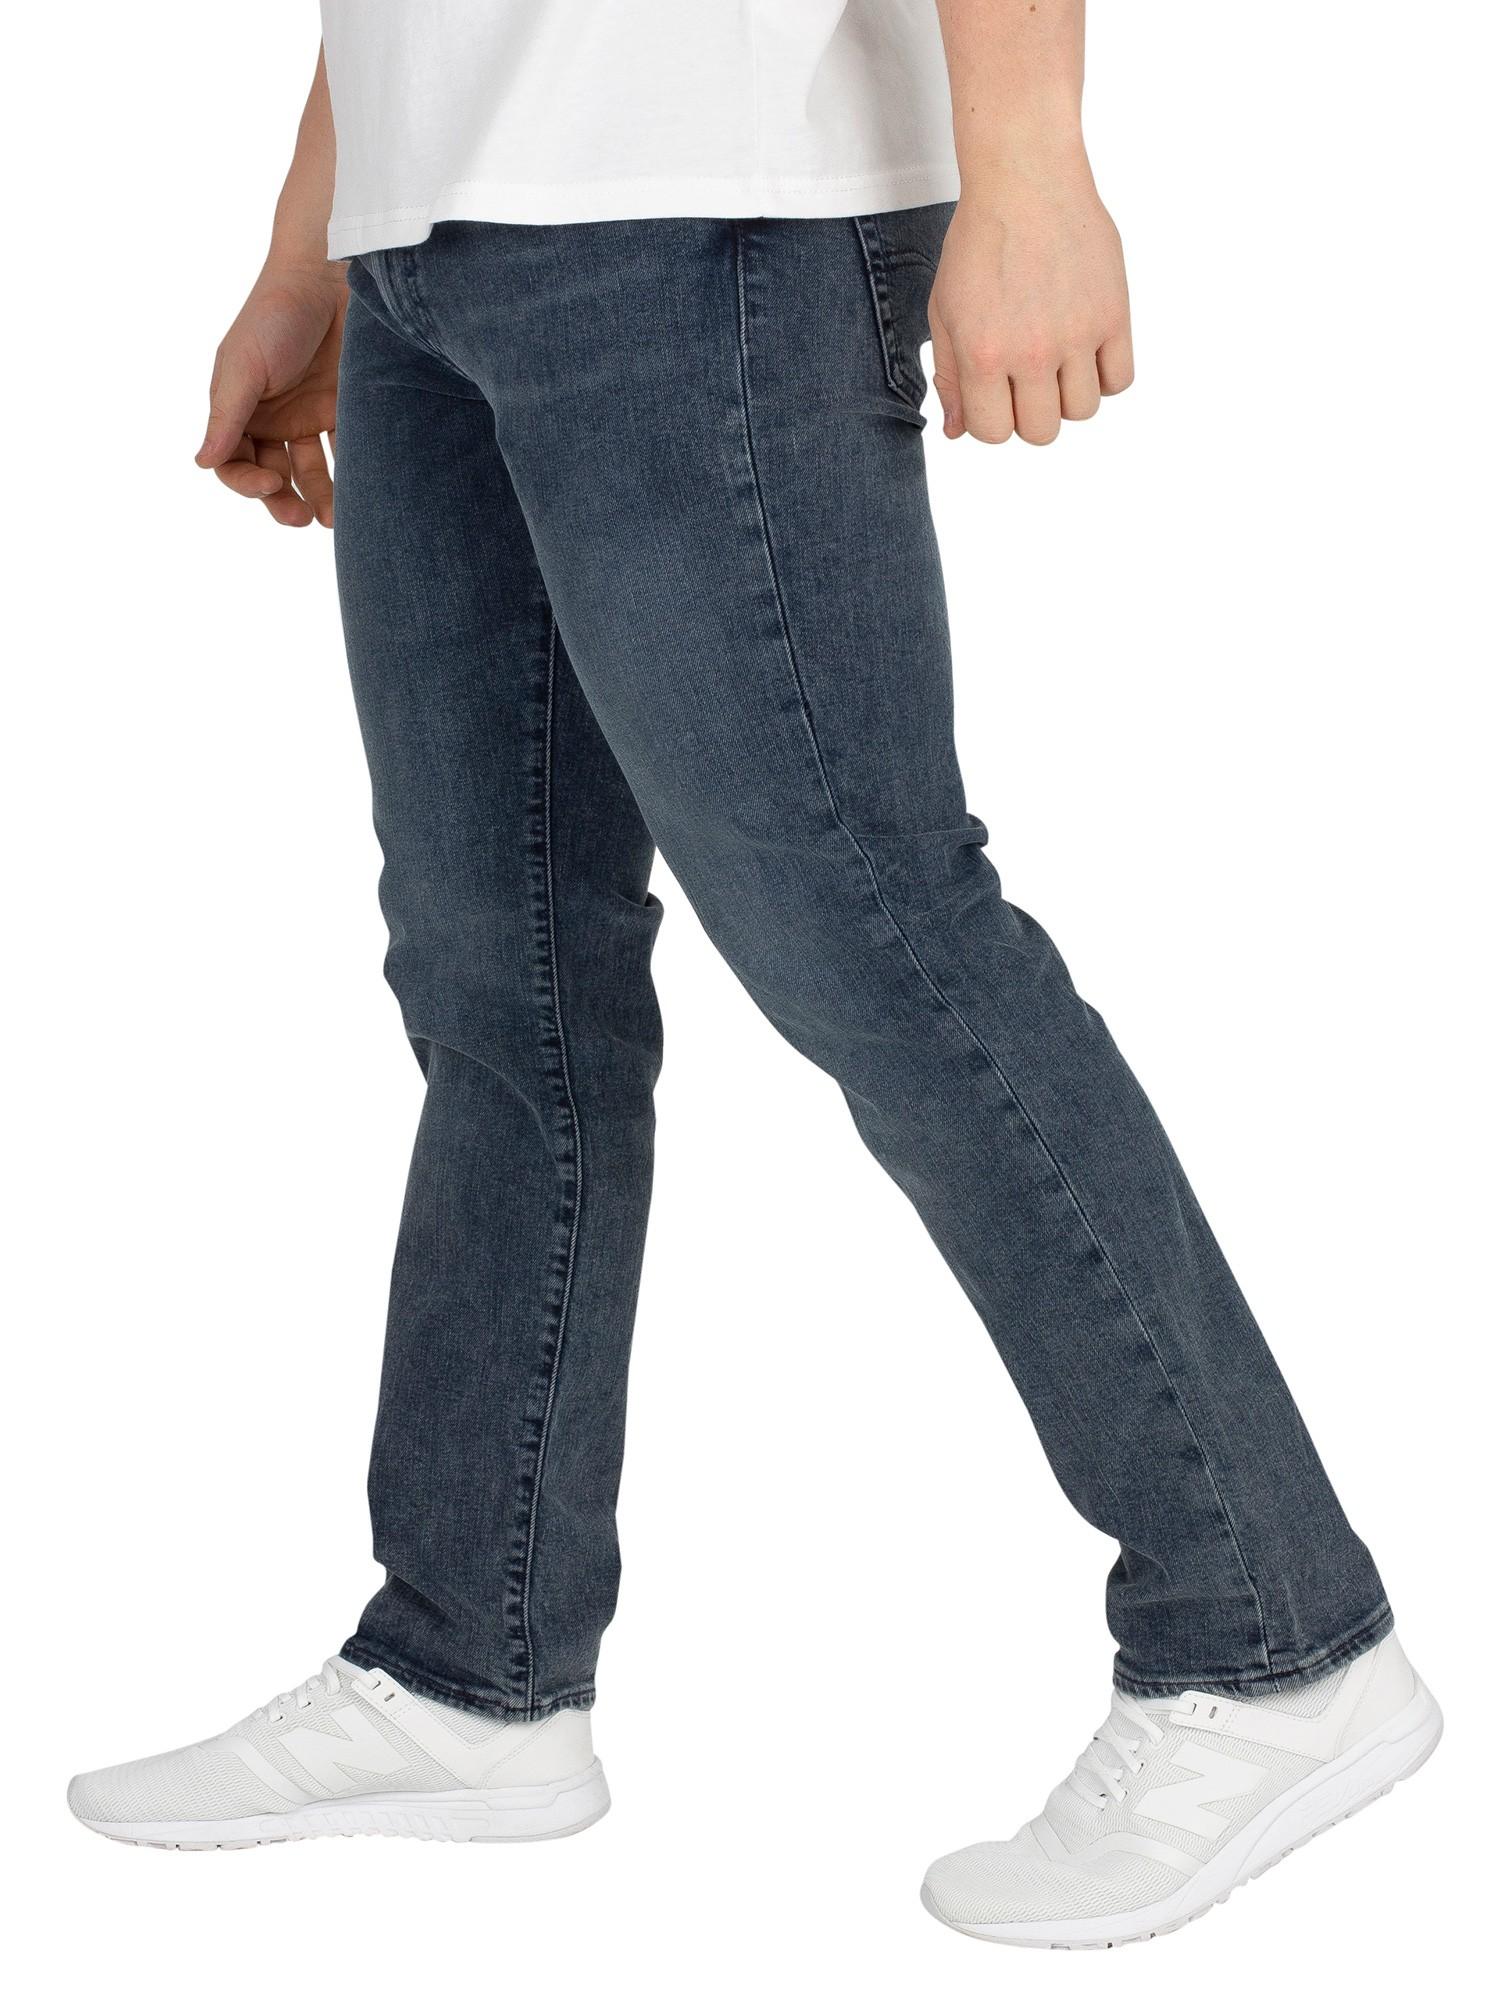 Levi's Denim 511 Slim Fit Jeans in Blue 